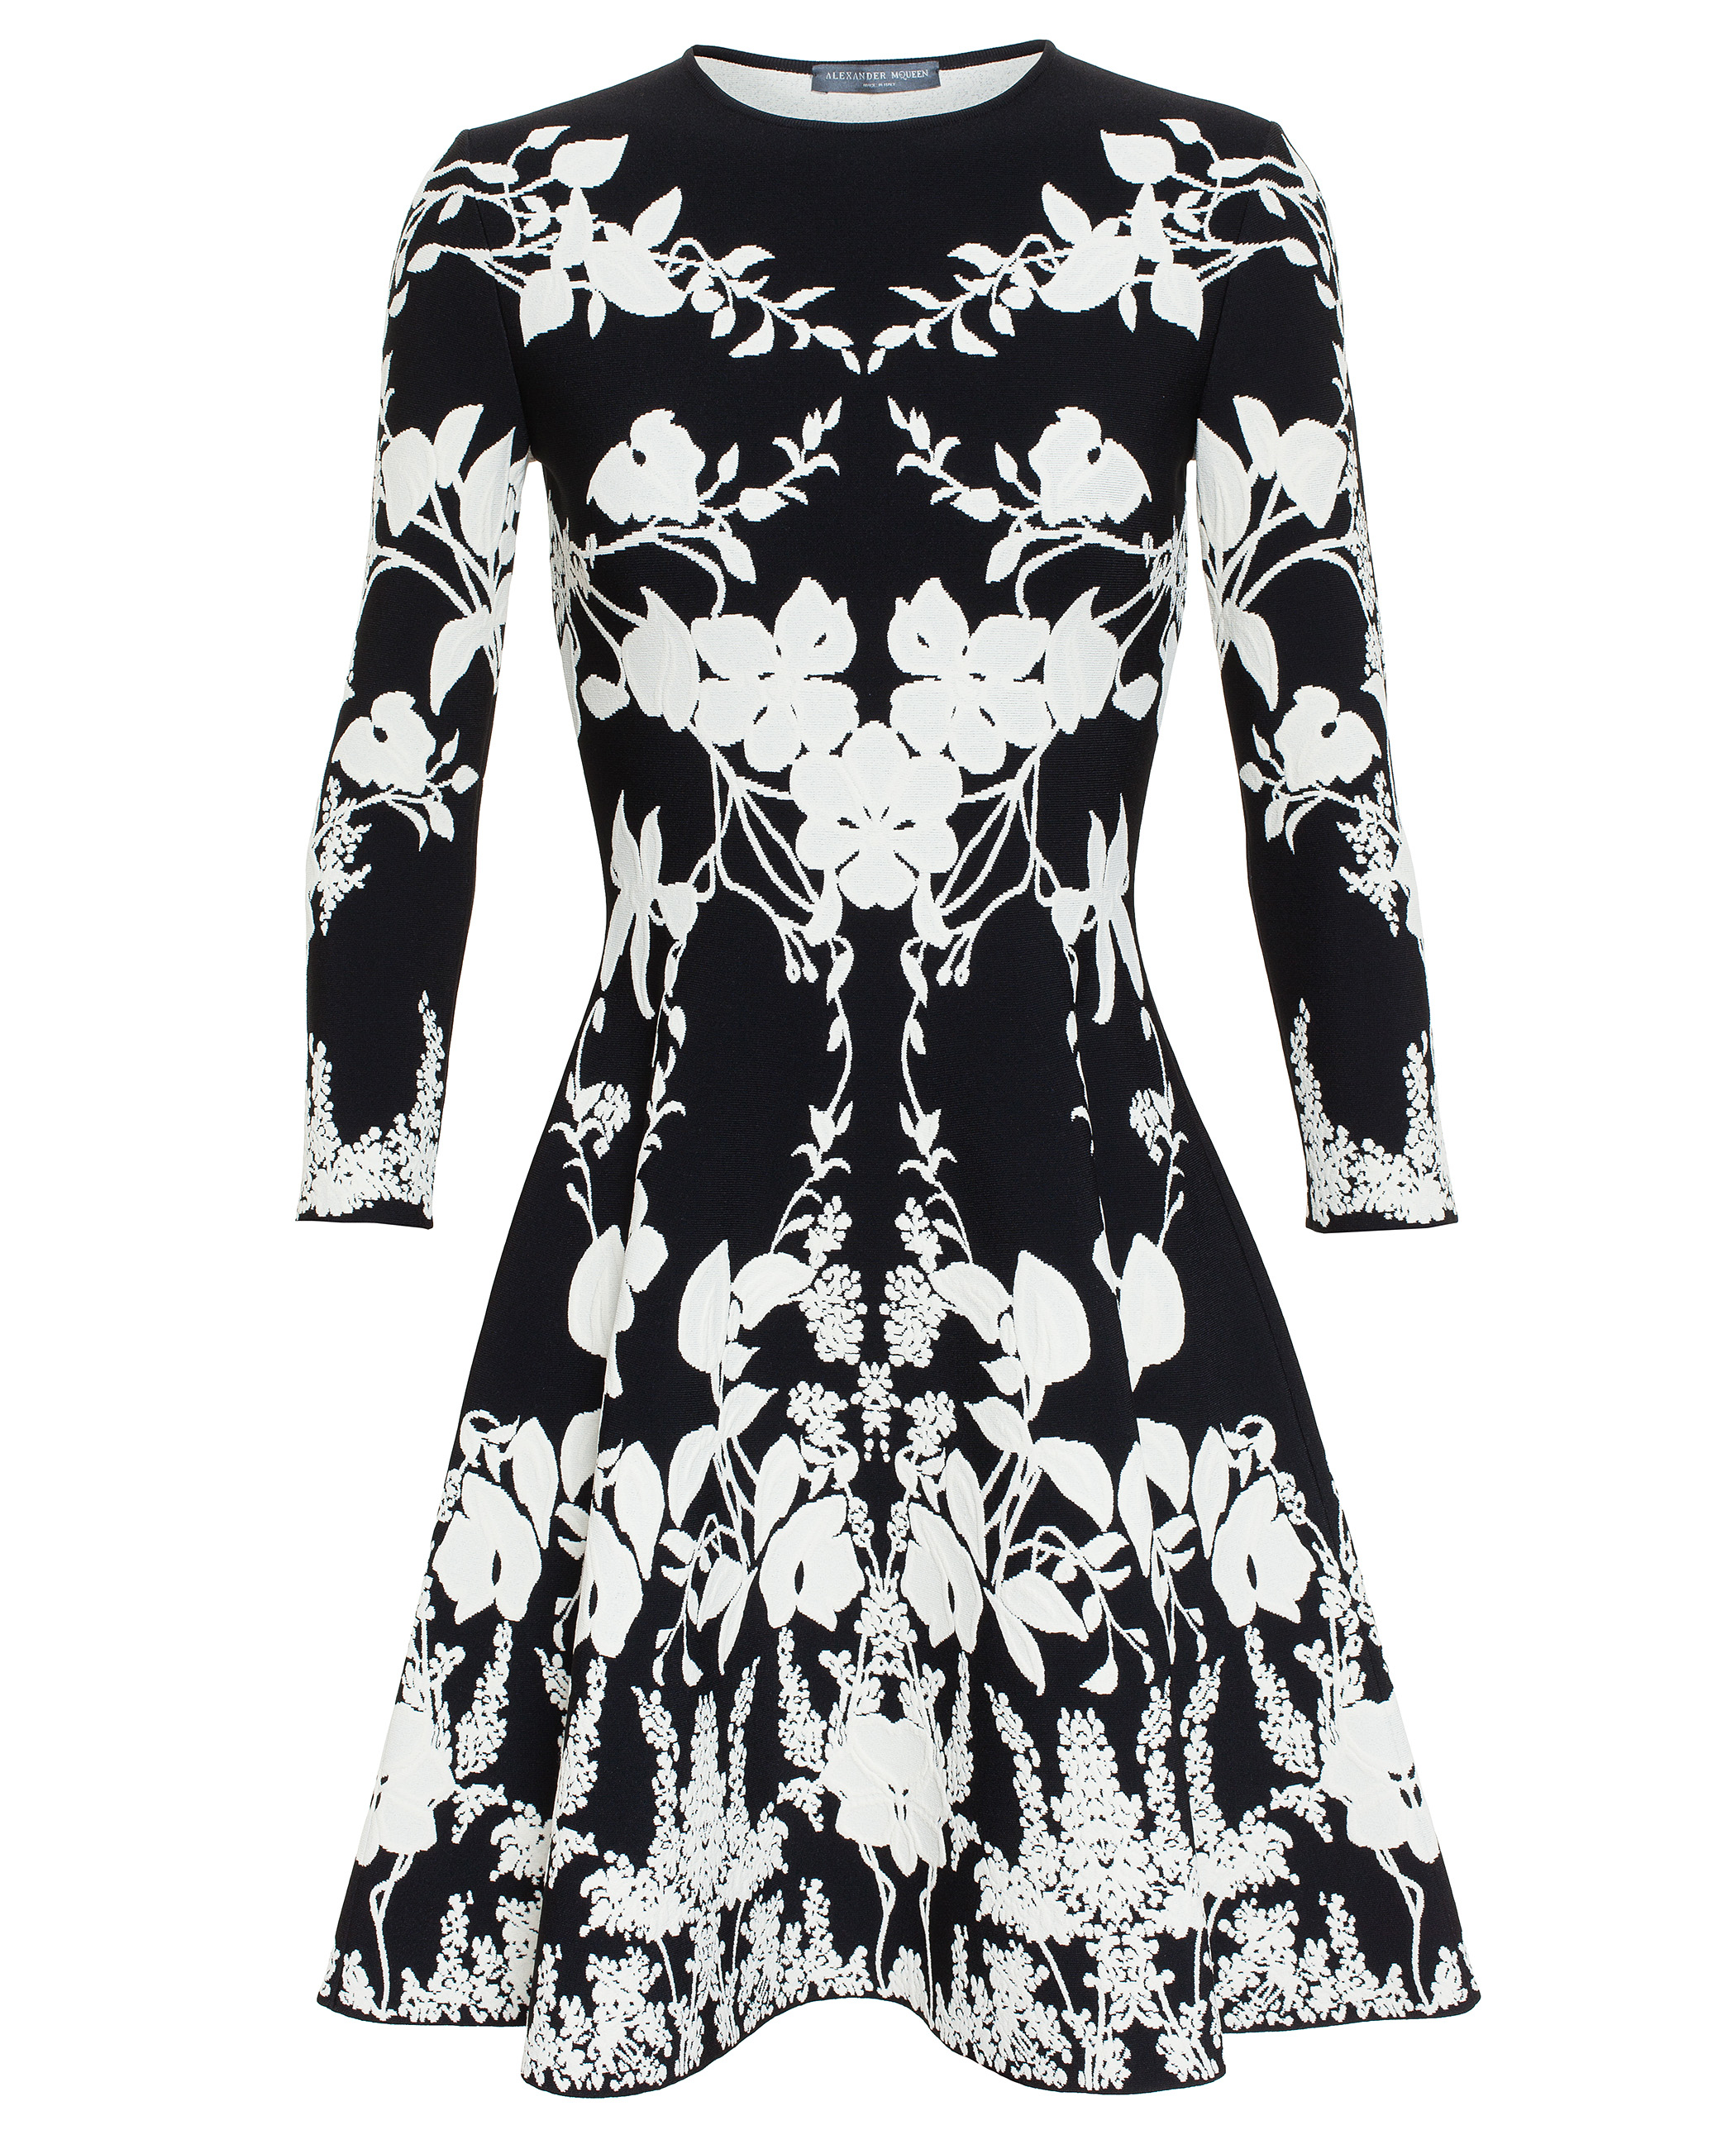 Lyst - Alexander Mcqueen Floral Patterned Knit Mini Dress in Black